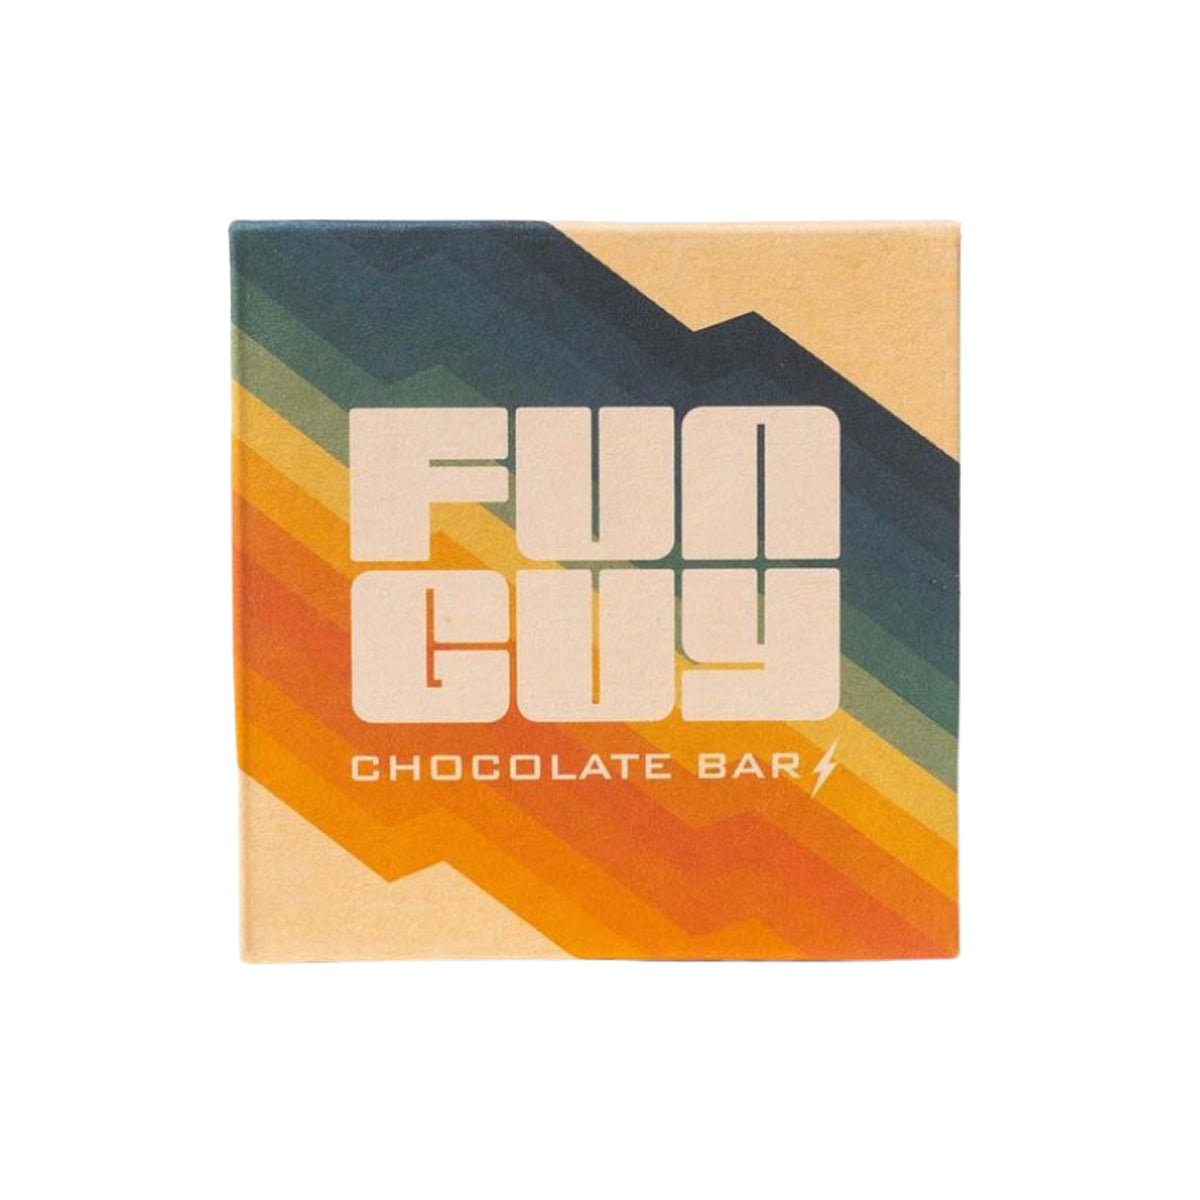 Funguy chocolates, buy funguy chocolates online, shrooms near me, magic mushroom chocolates